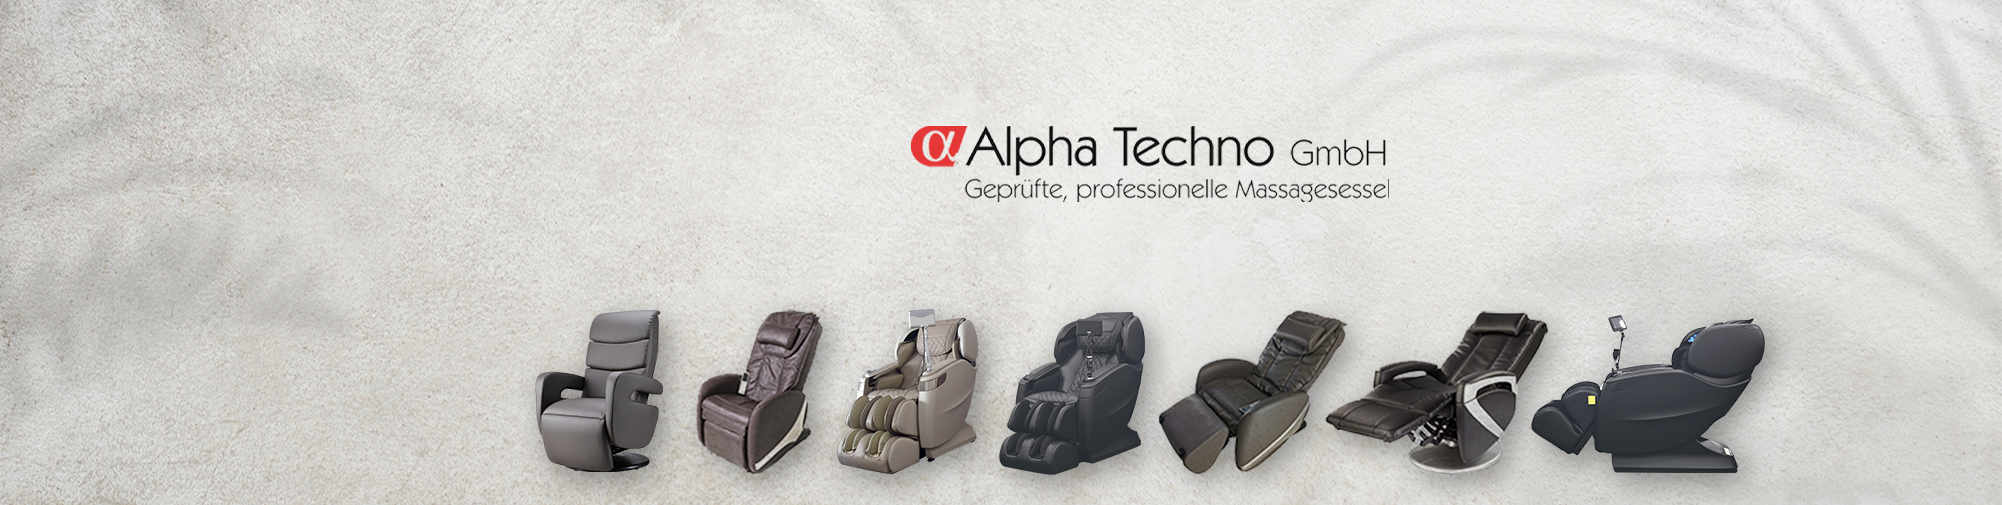 Alpha Techno - номер 1 в Европа | Massage Chair World